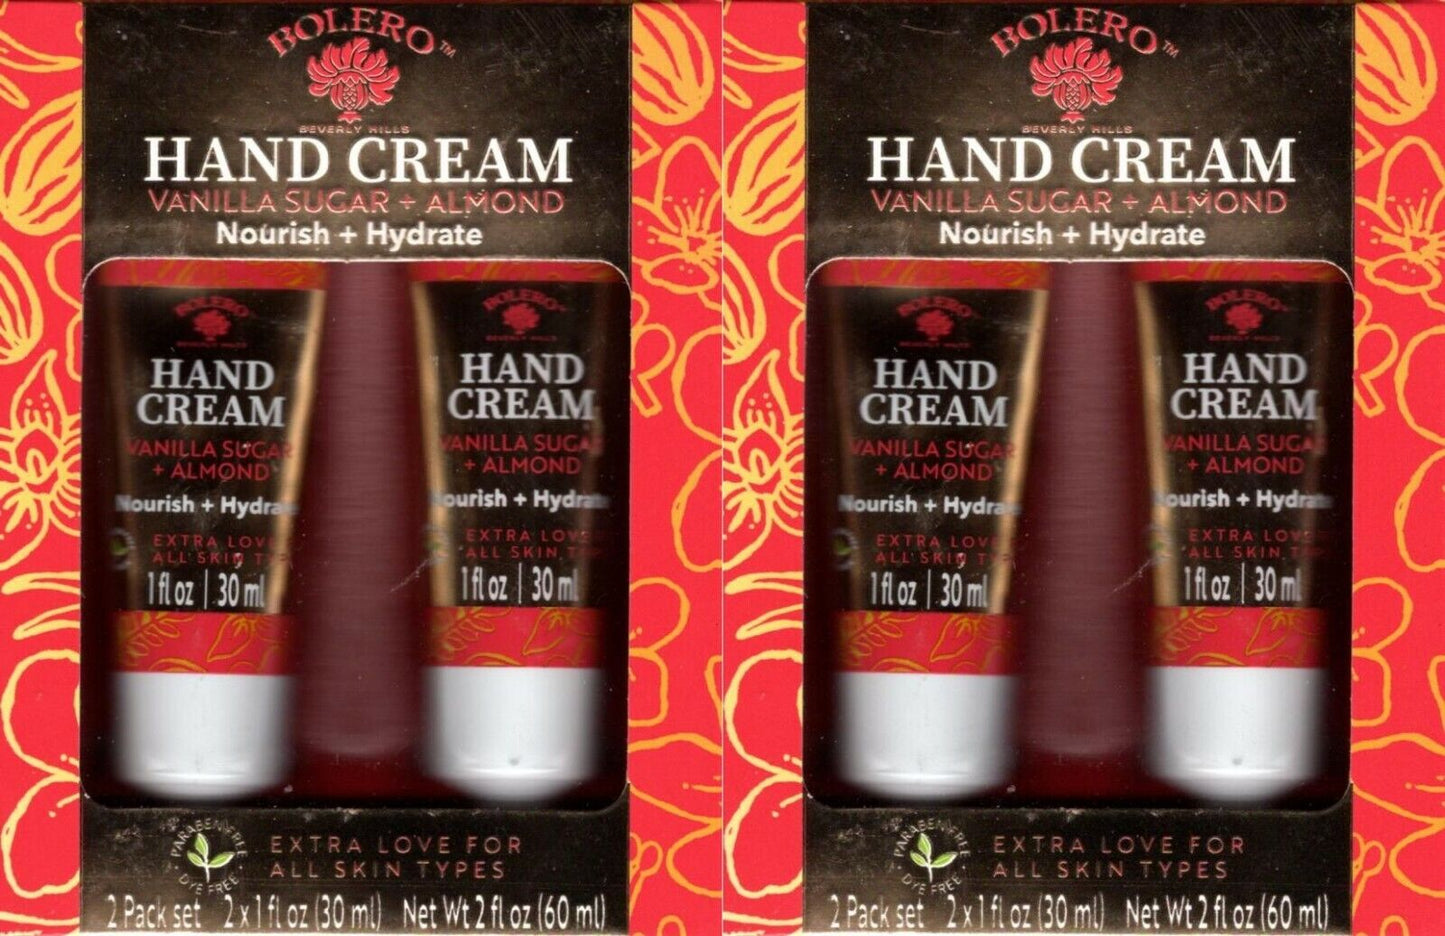 Vanilla Sugar + Almond Nourish + Hydrate Hand Cream 2 Pack Set Moisturize Set